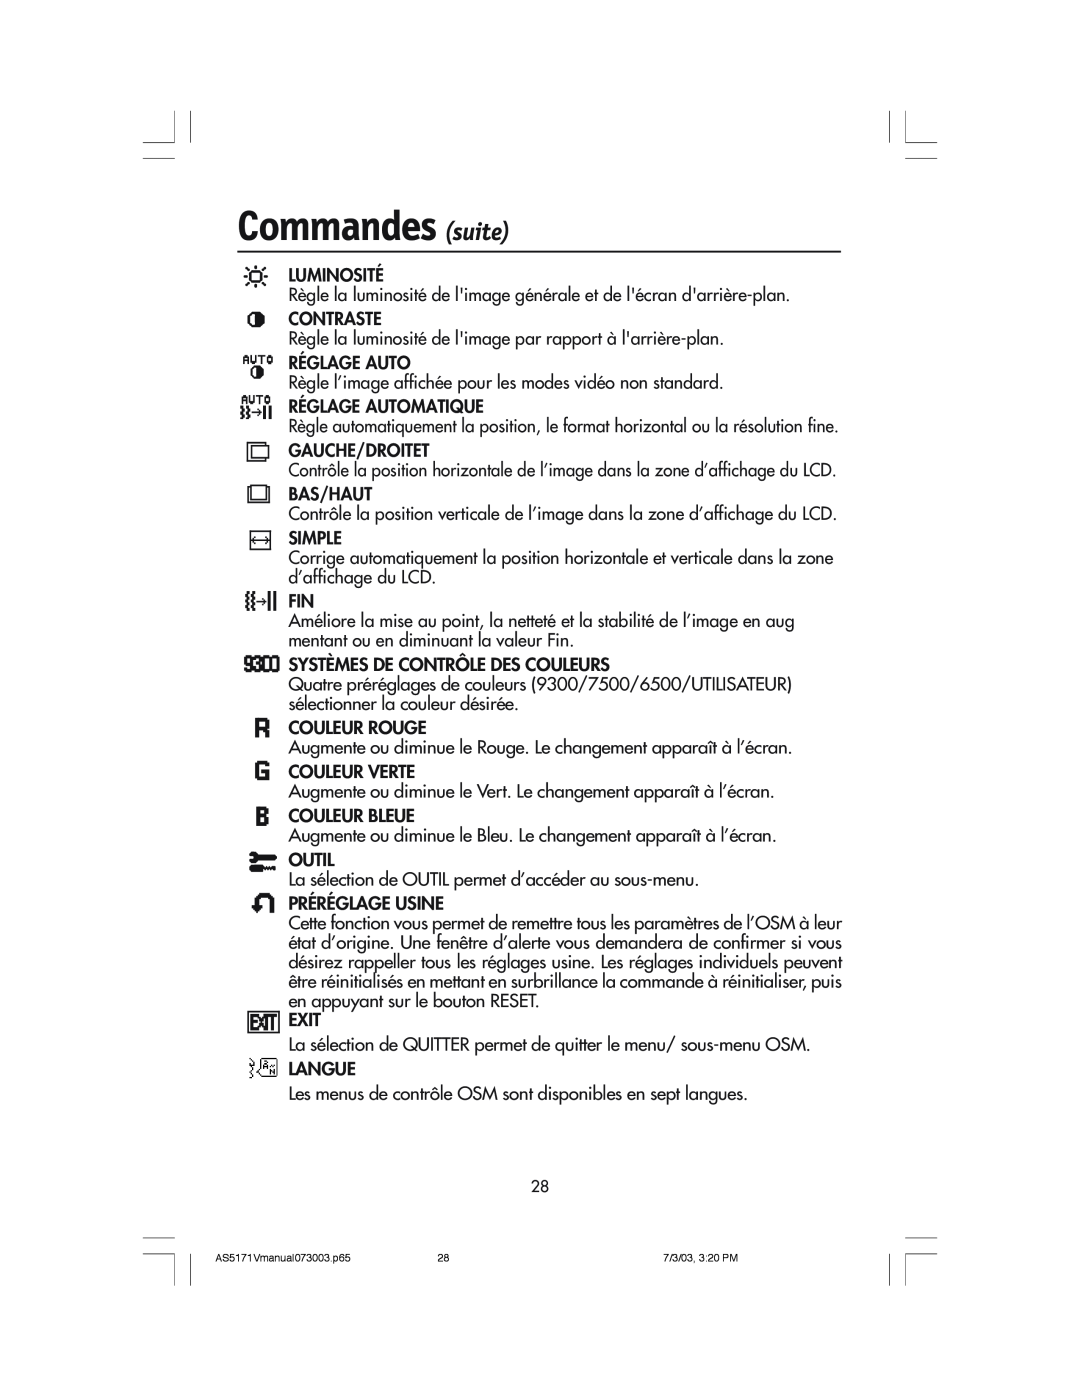 NEC LCD71V manual Commandes suite 